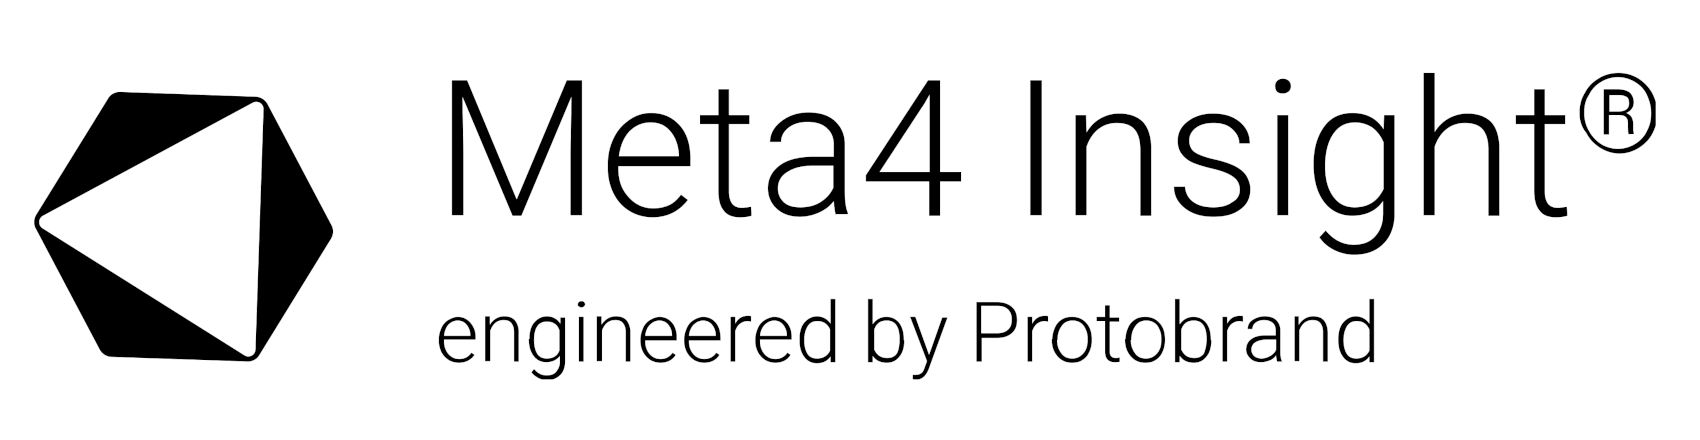 meta4insight logo